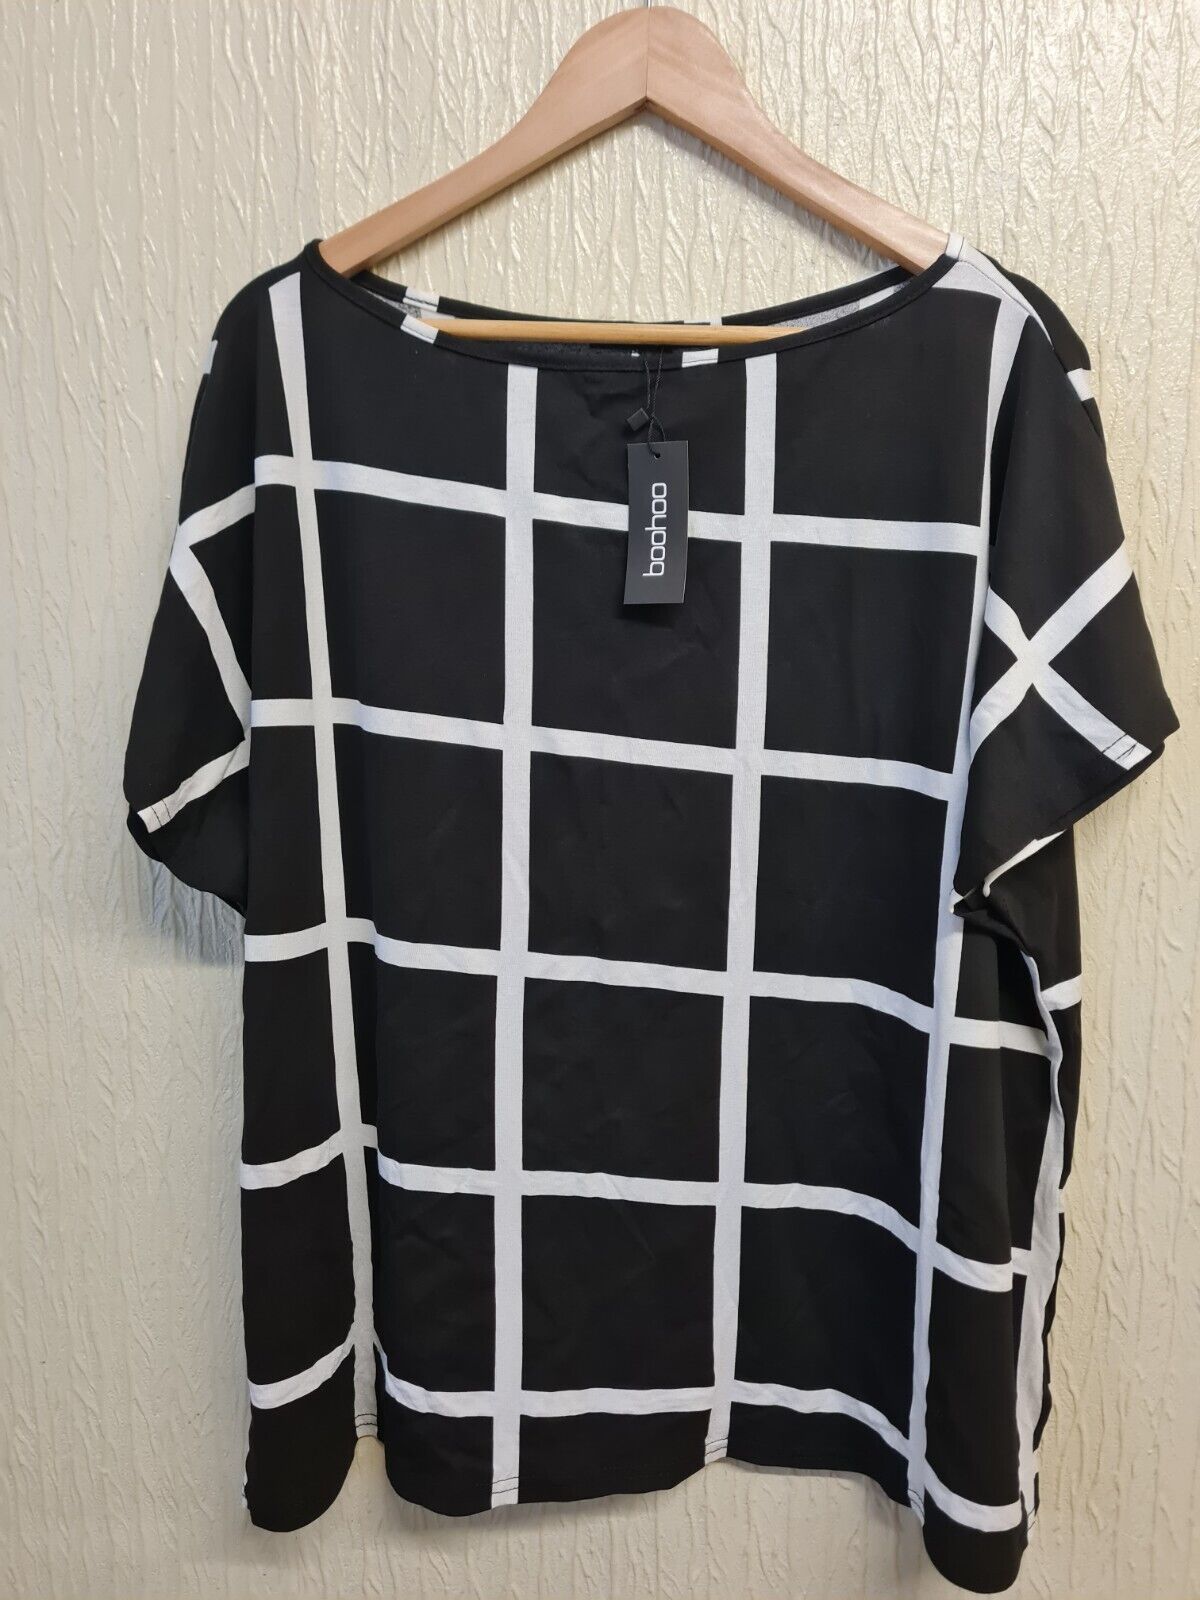 Primary image for Boohoo Ladies Plus Grid Print Oversized Tshirt Multi Size 22uk Express Shipping